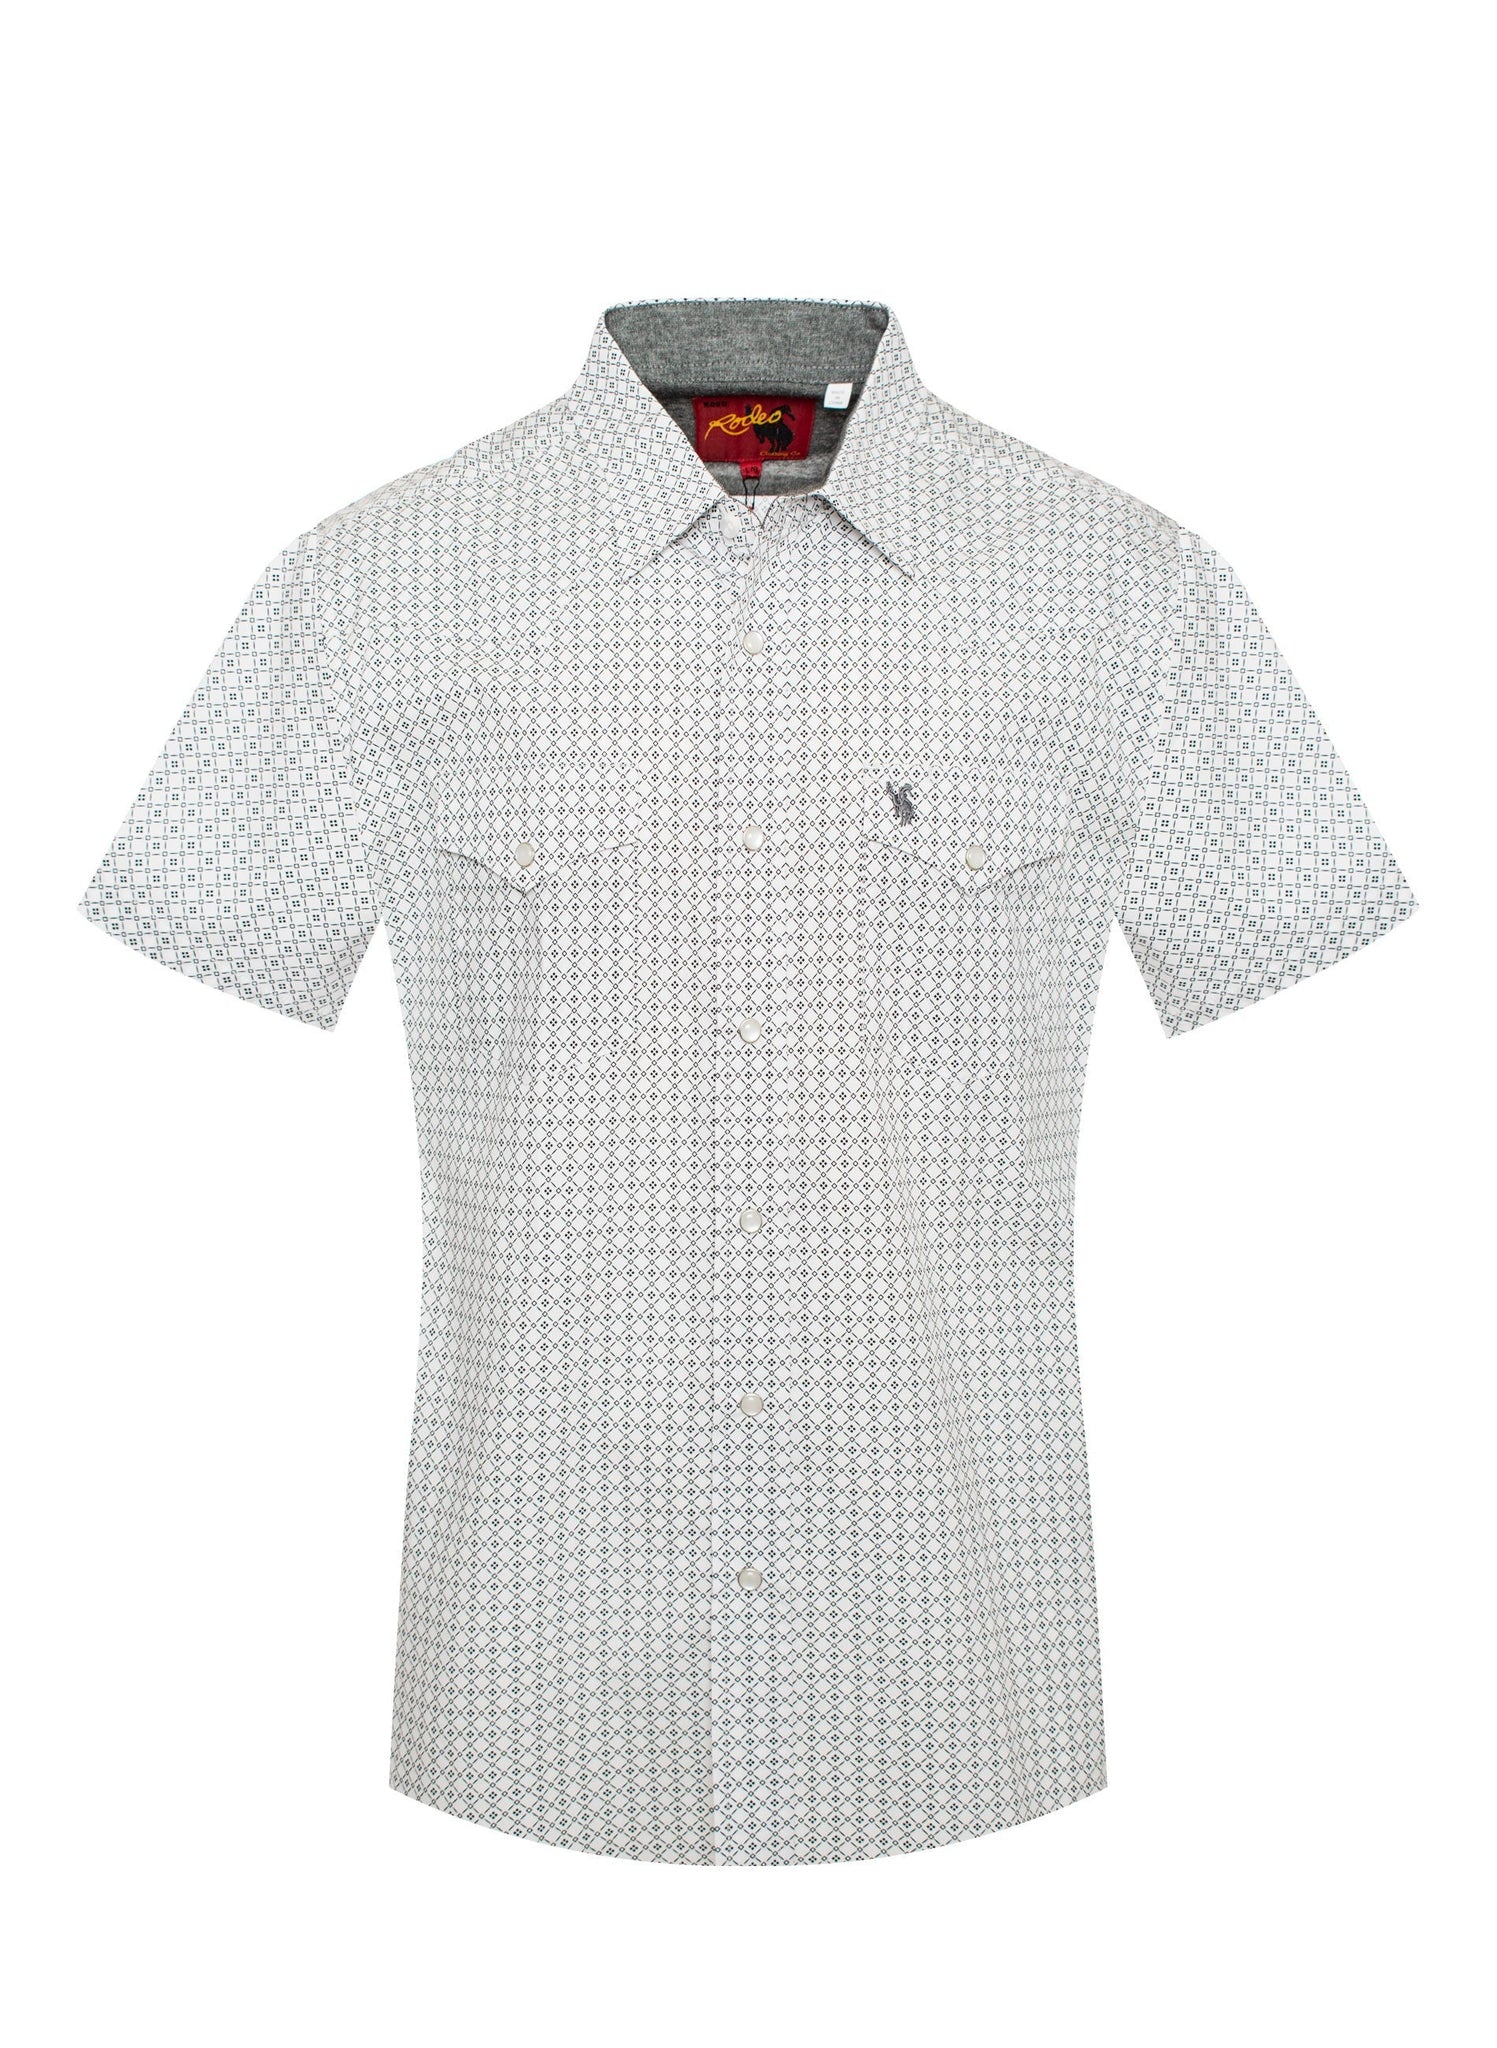 Men's Short Sleeve Pearl Snap Print Shirt -PS100S-142